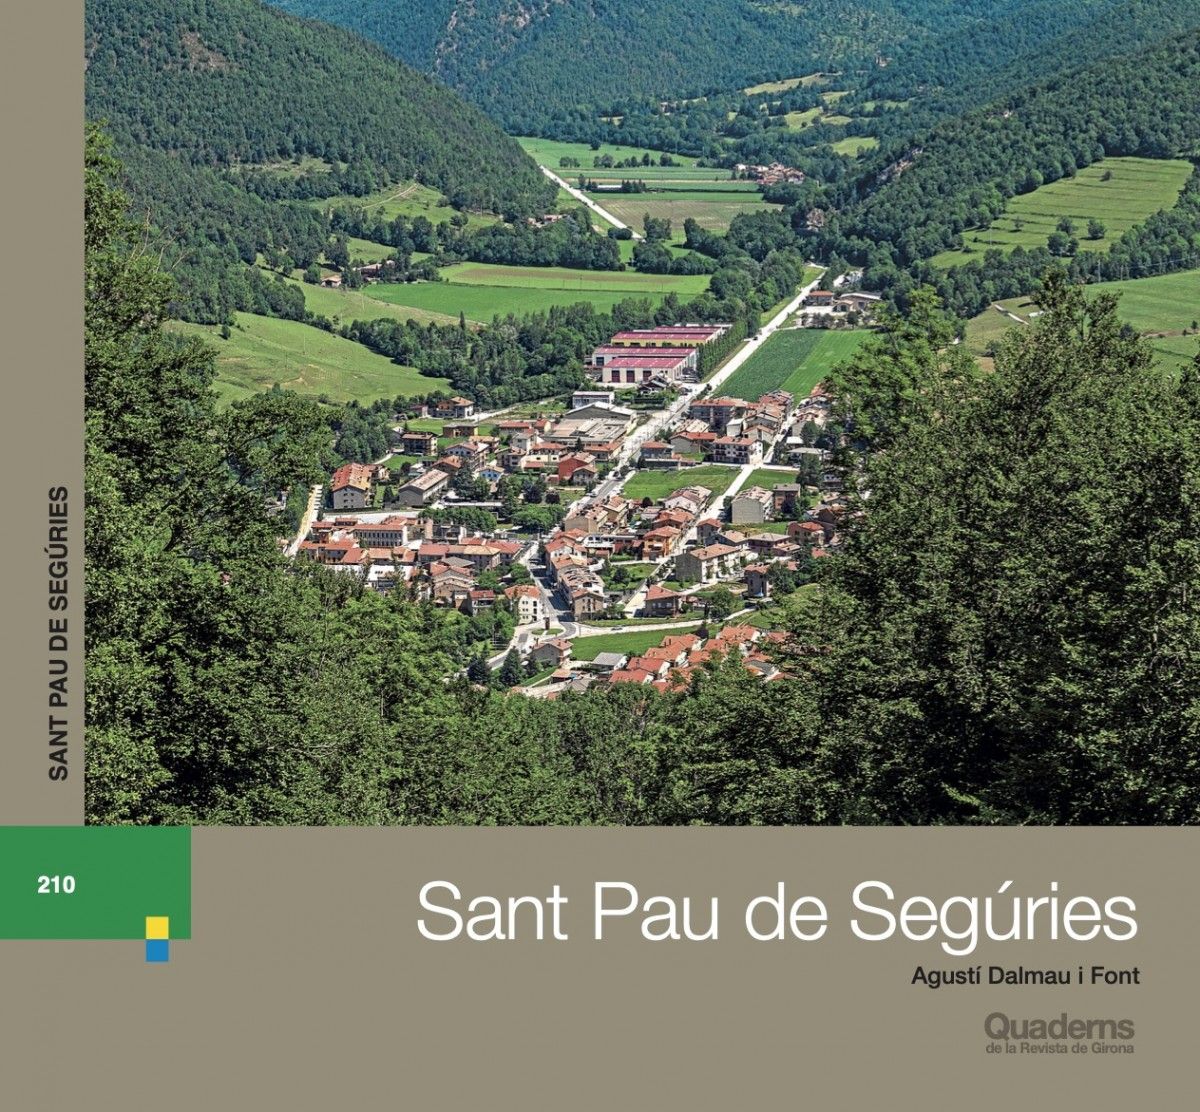 Coberta de la monografia dedicada a Sant Pau de Segúries.